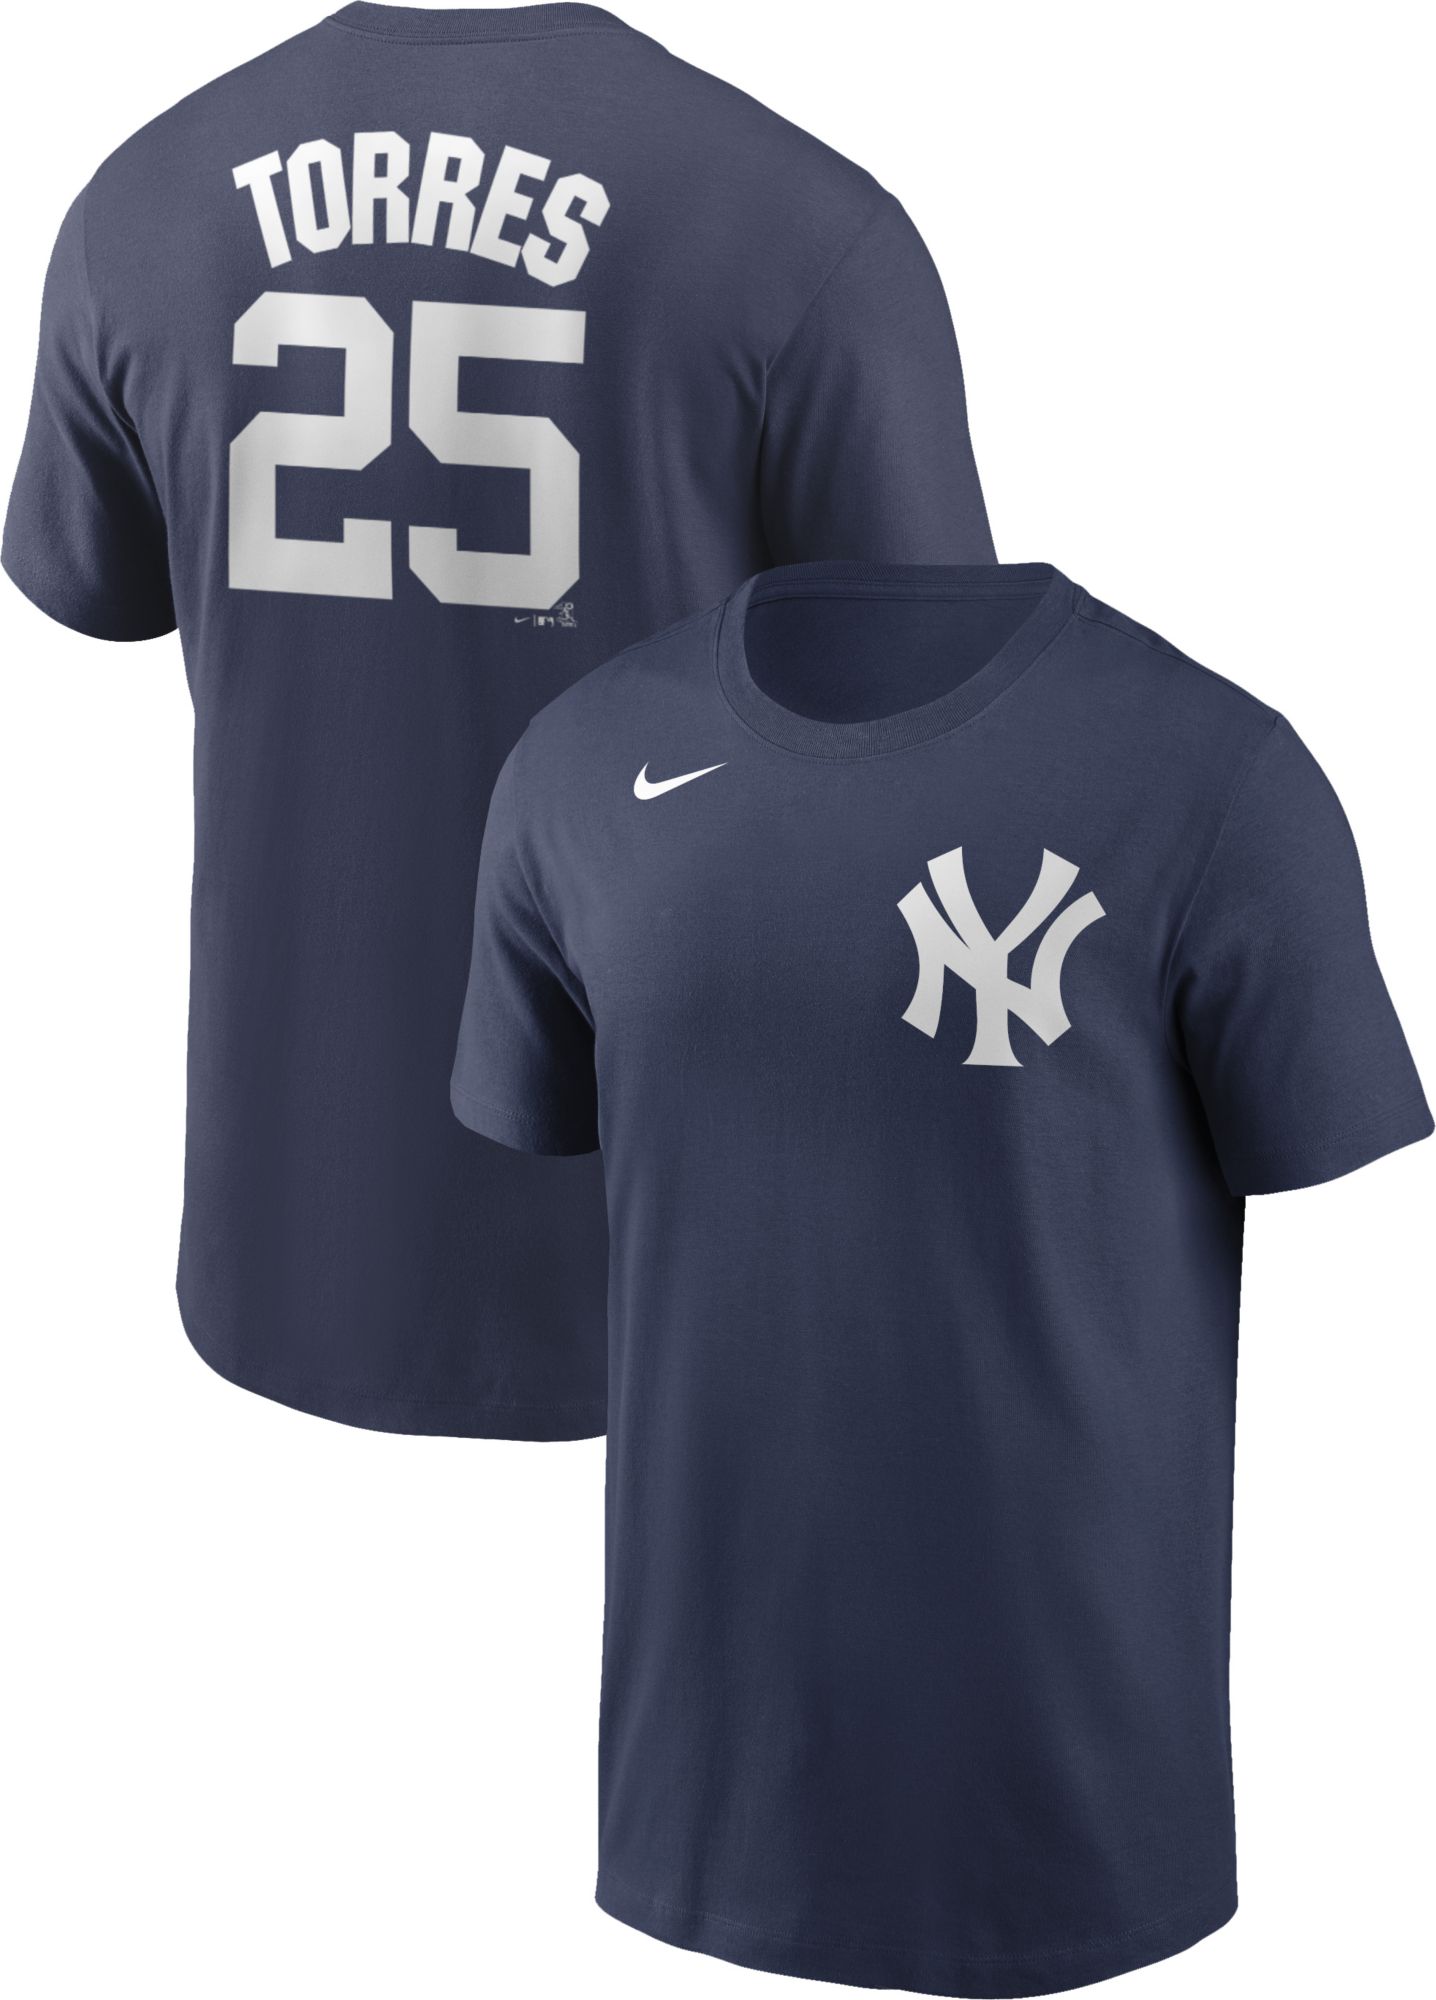 New York Yankees Men's 500 Level Aaron Judge New York Navy Shirt